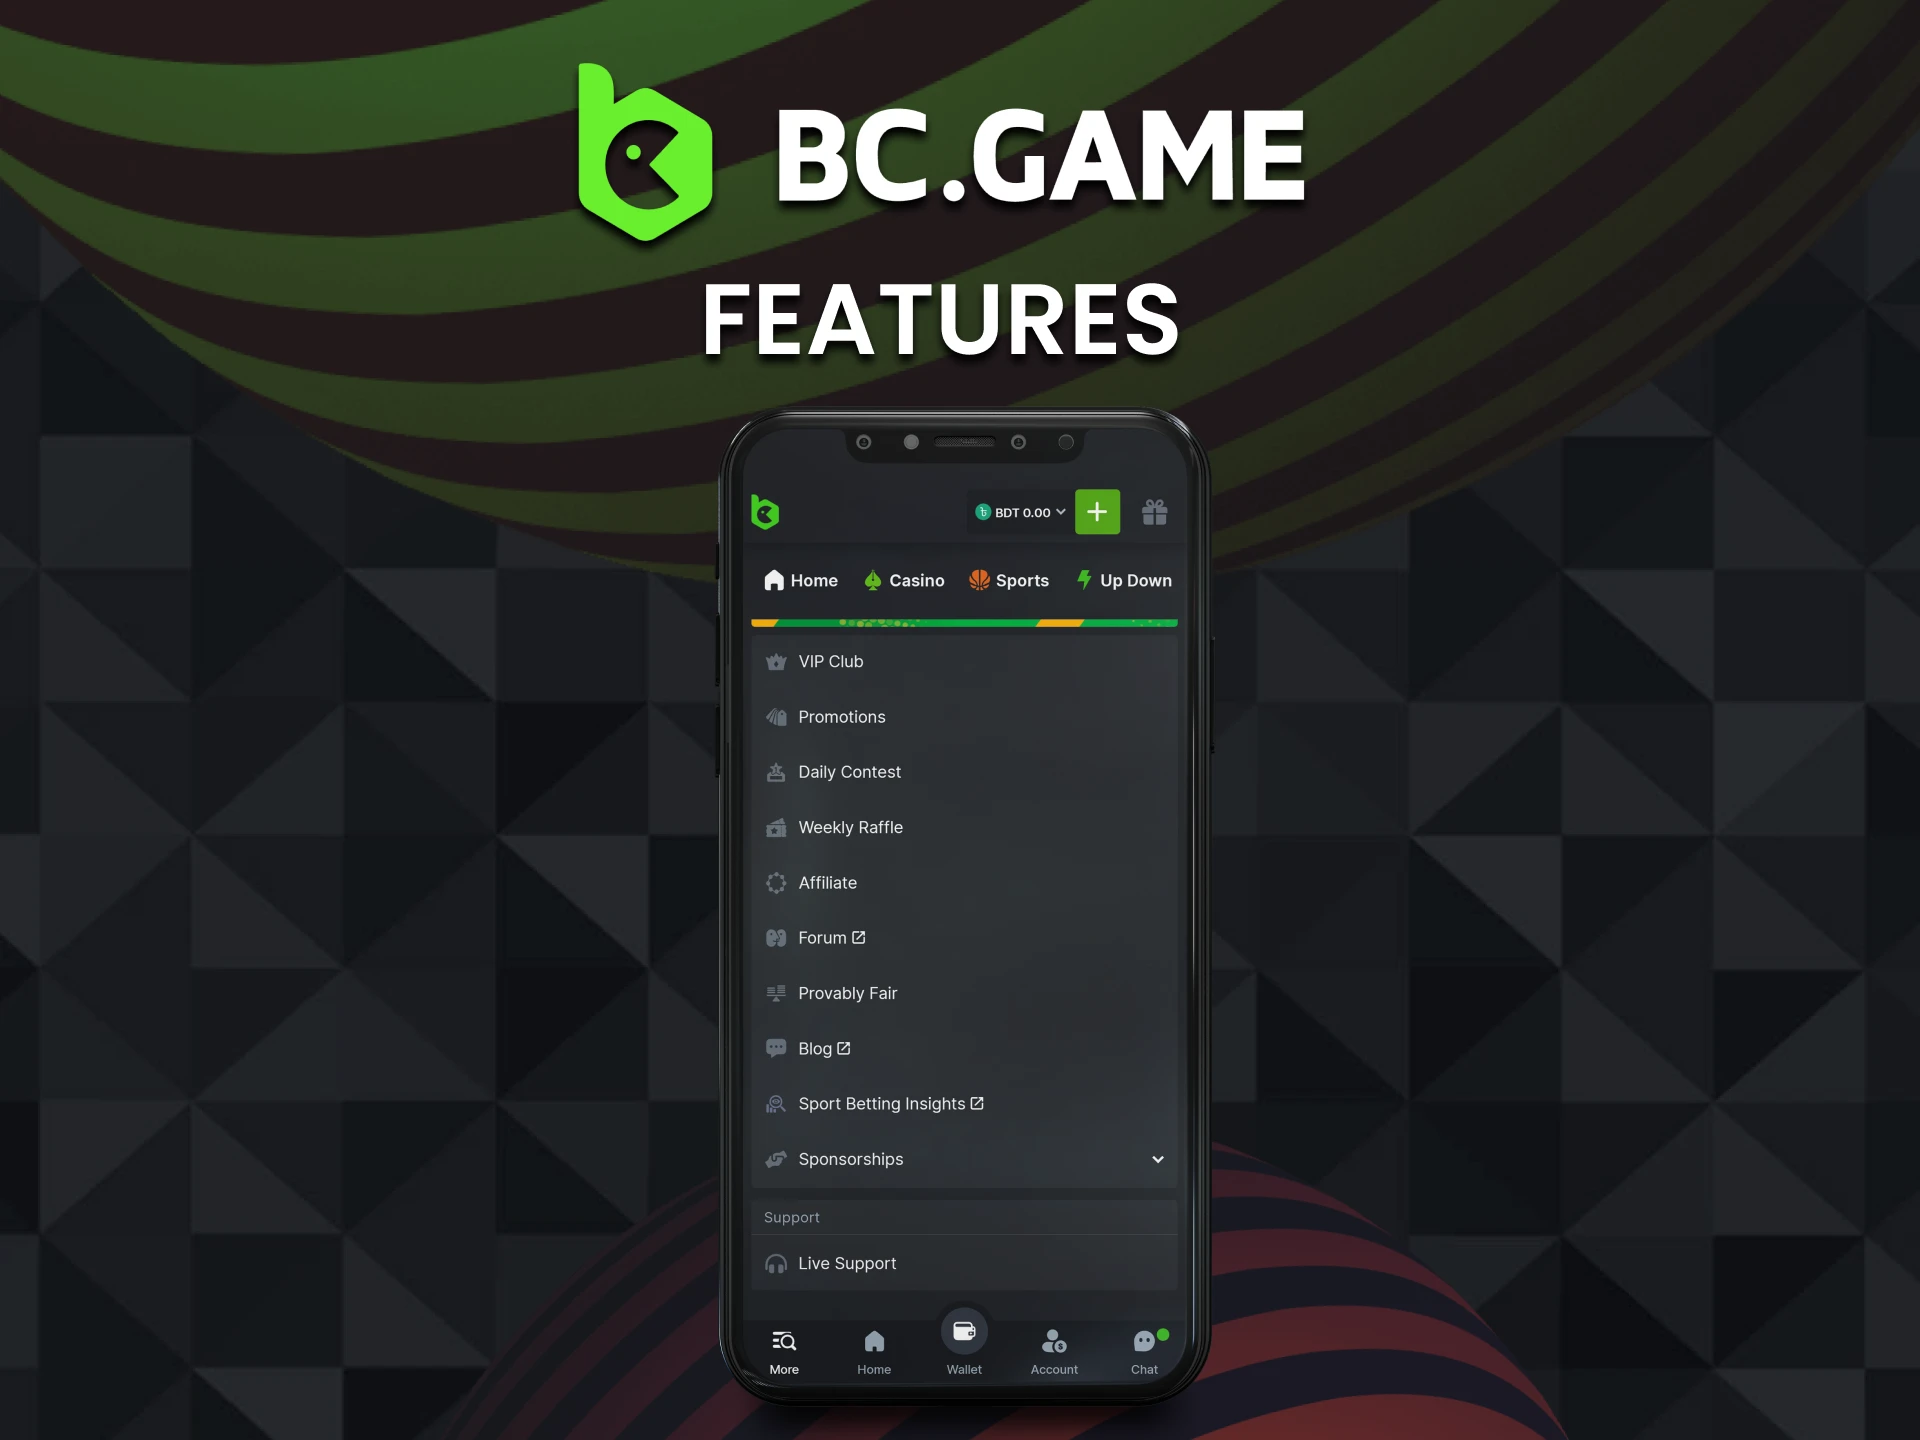 BC Game app has many benefits for Bangladeshi players.